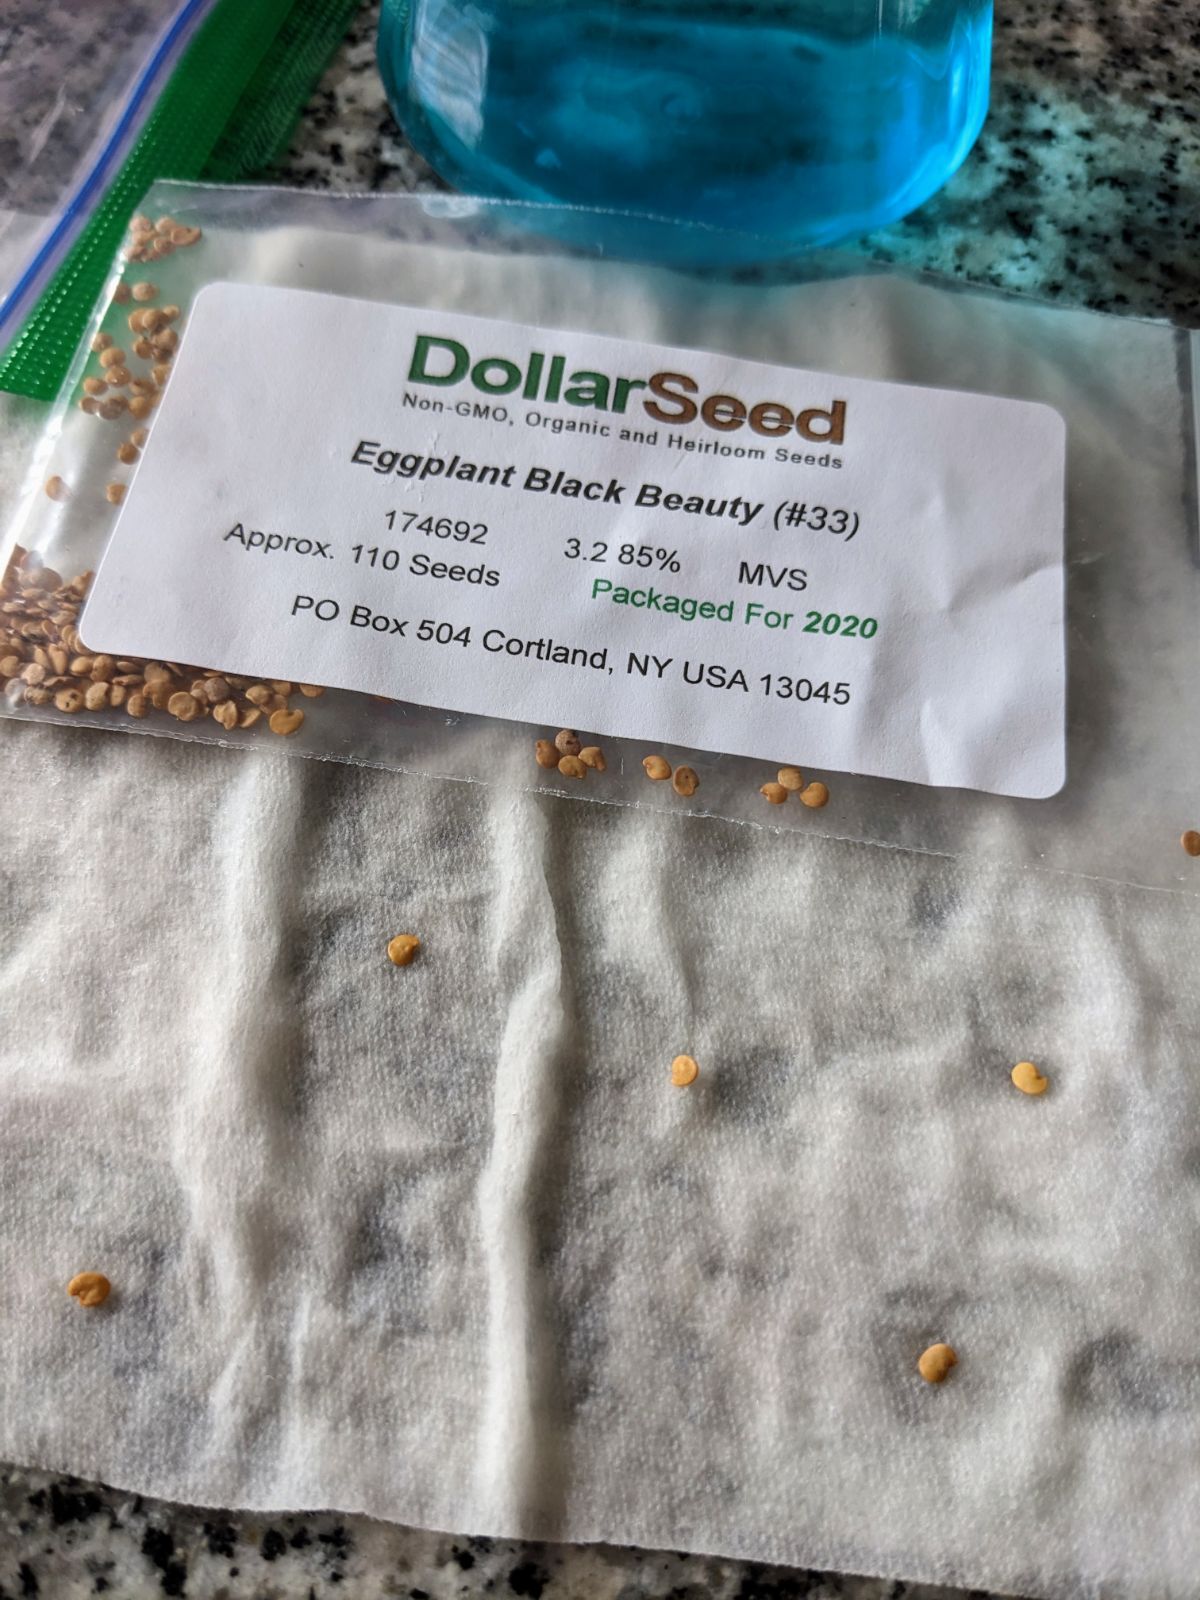 Germinating eggplant seeds with paper towel, ziploc baggie, and water